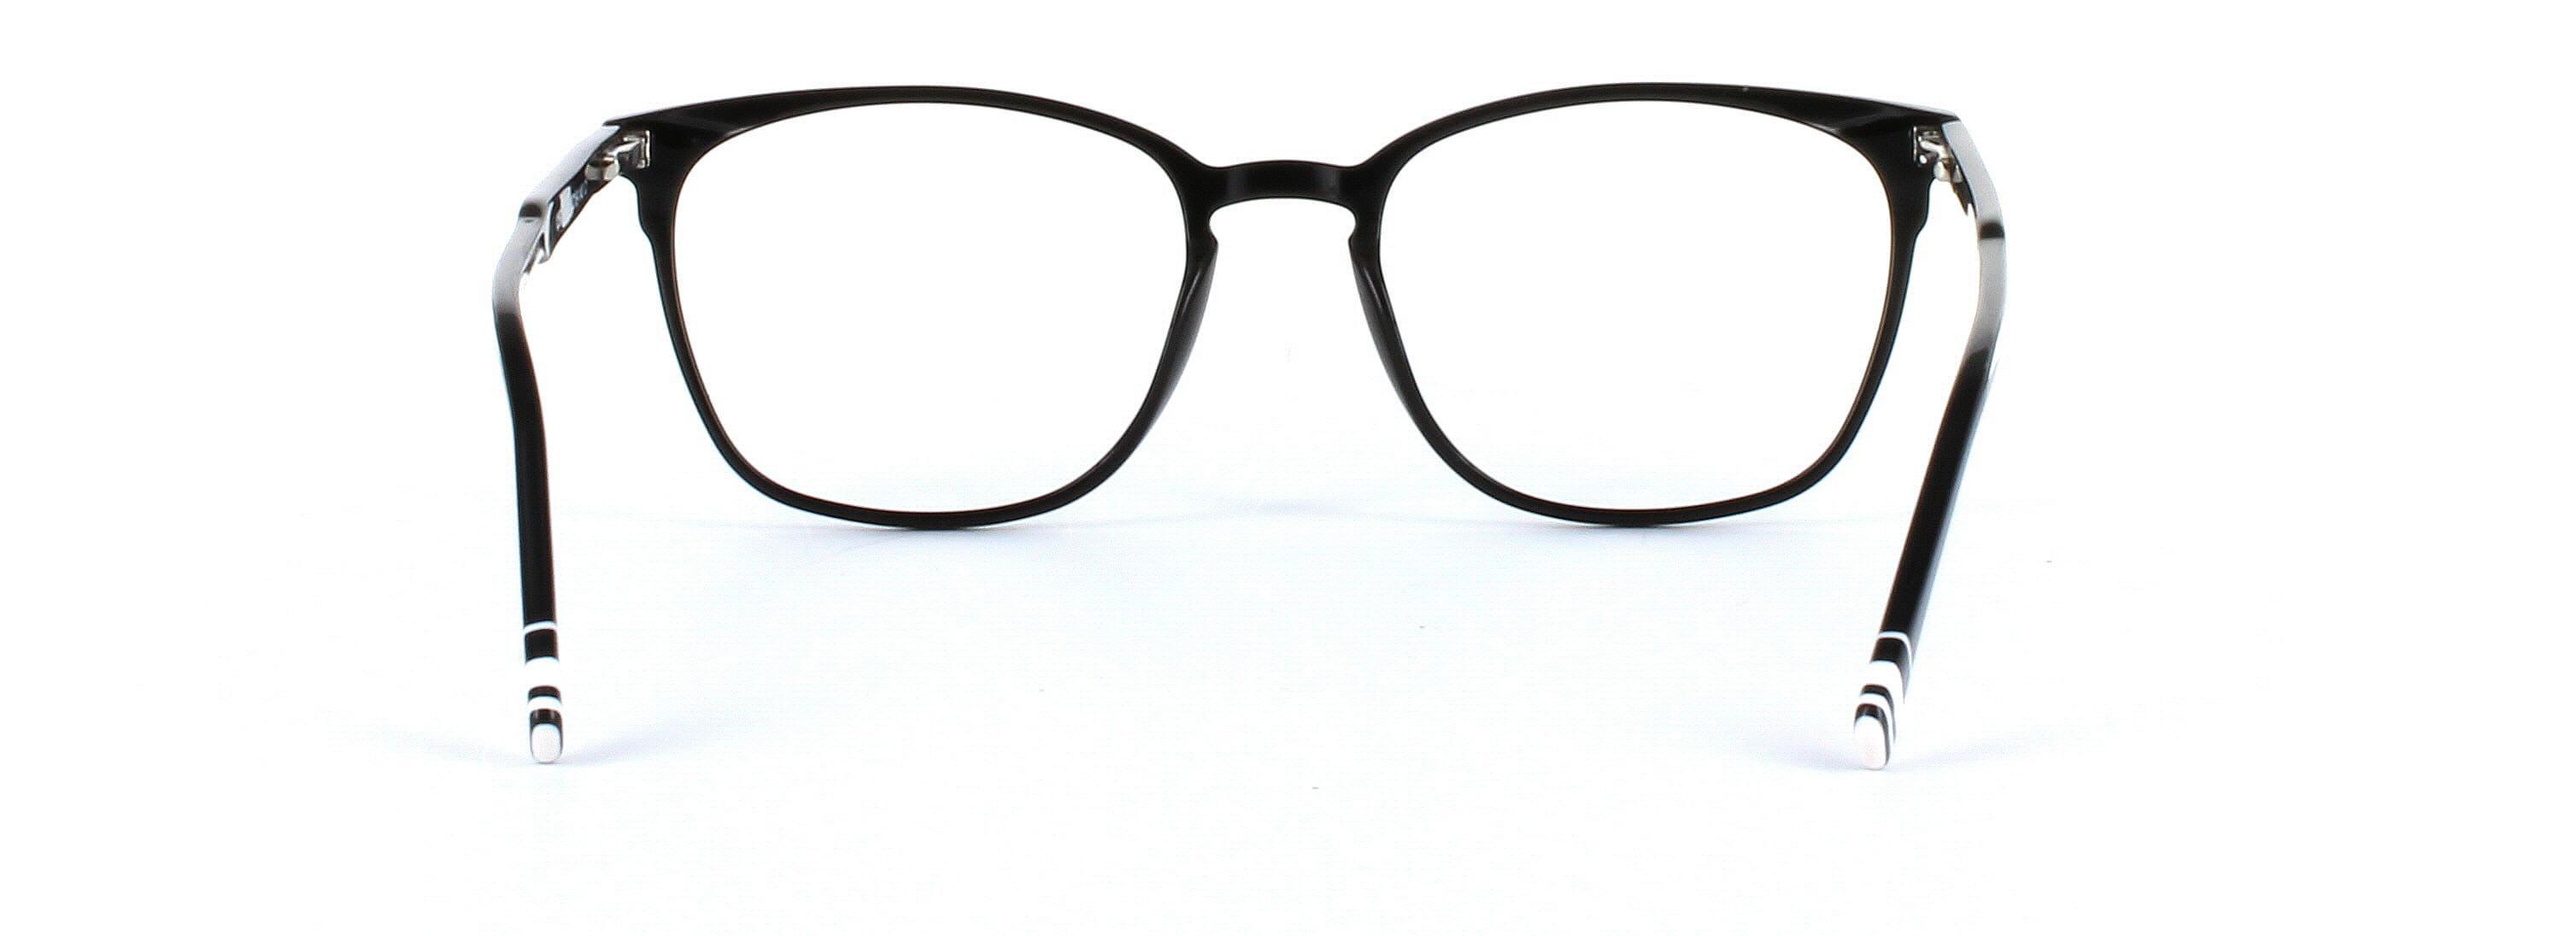 Astley Black Full Rim Round Acetate Glasses - Image View 3